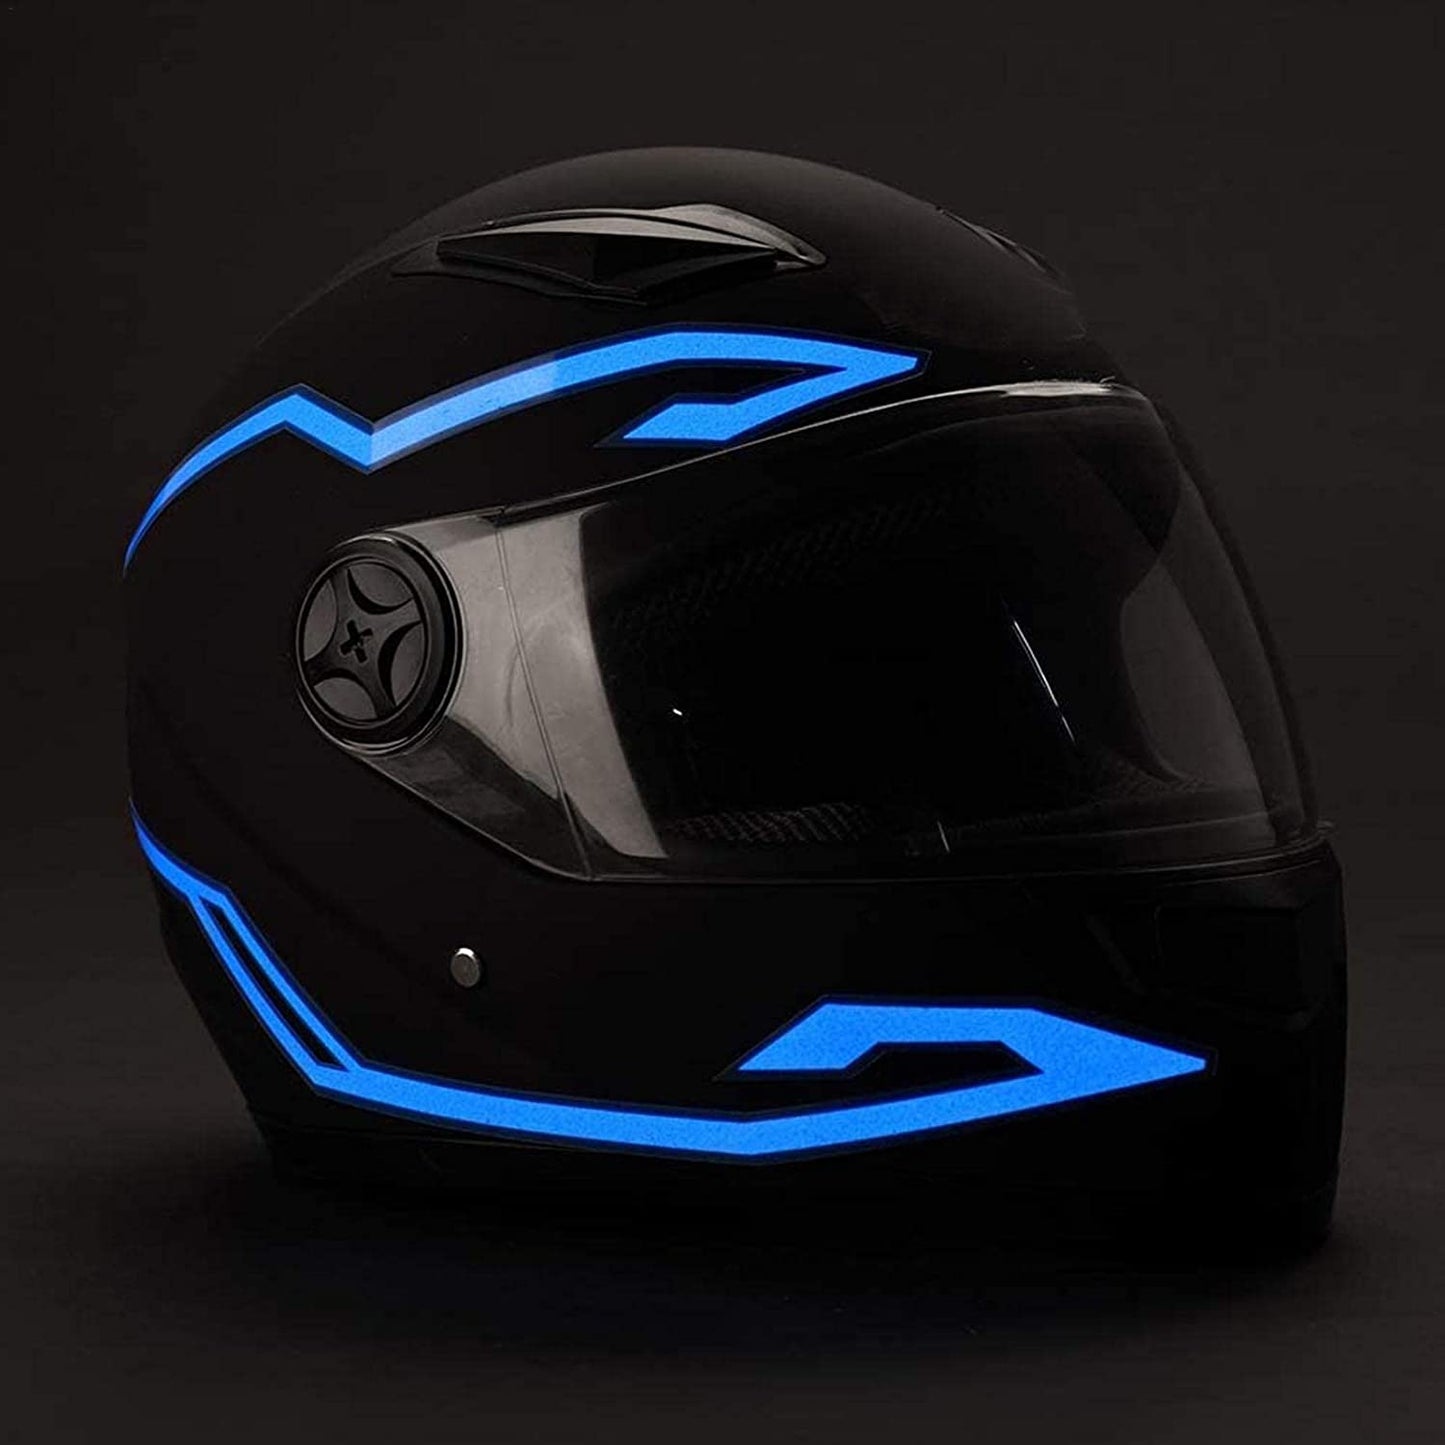 Eclairage casque moto - X10 Maroc - Livraison gratuite -